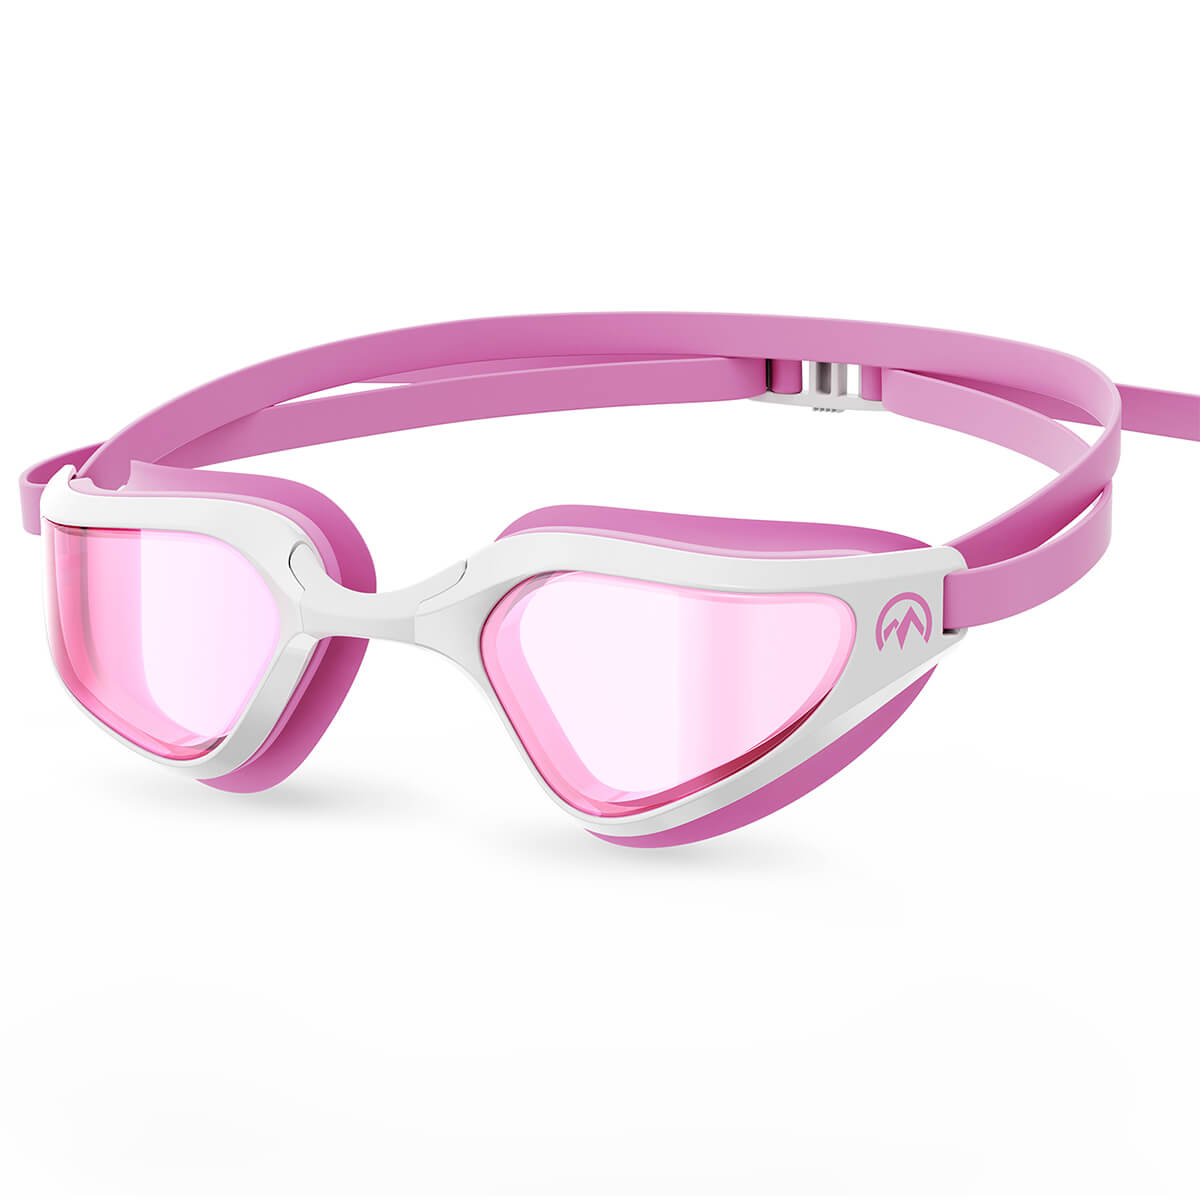 Fisheye Anti-fog Swimming Goggles for Adults